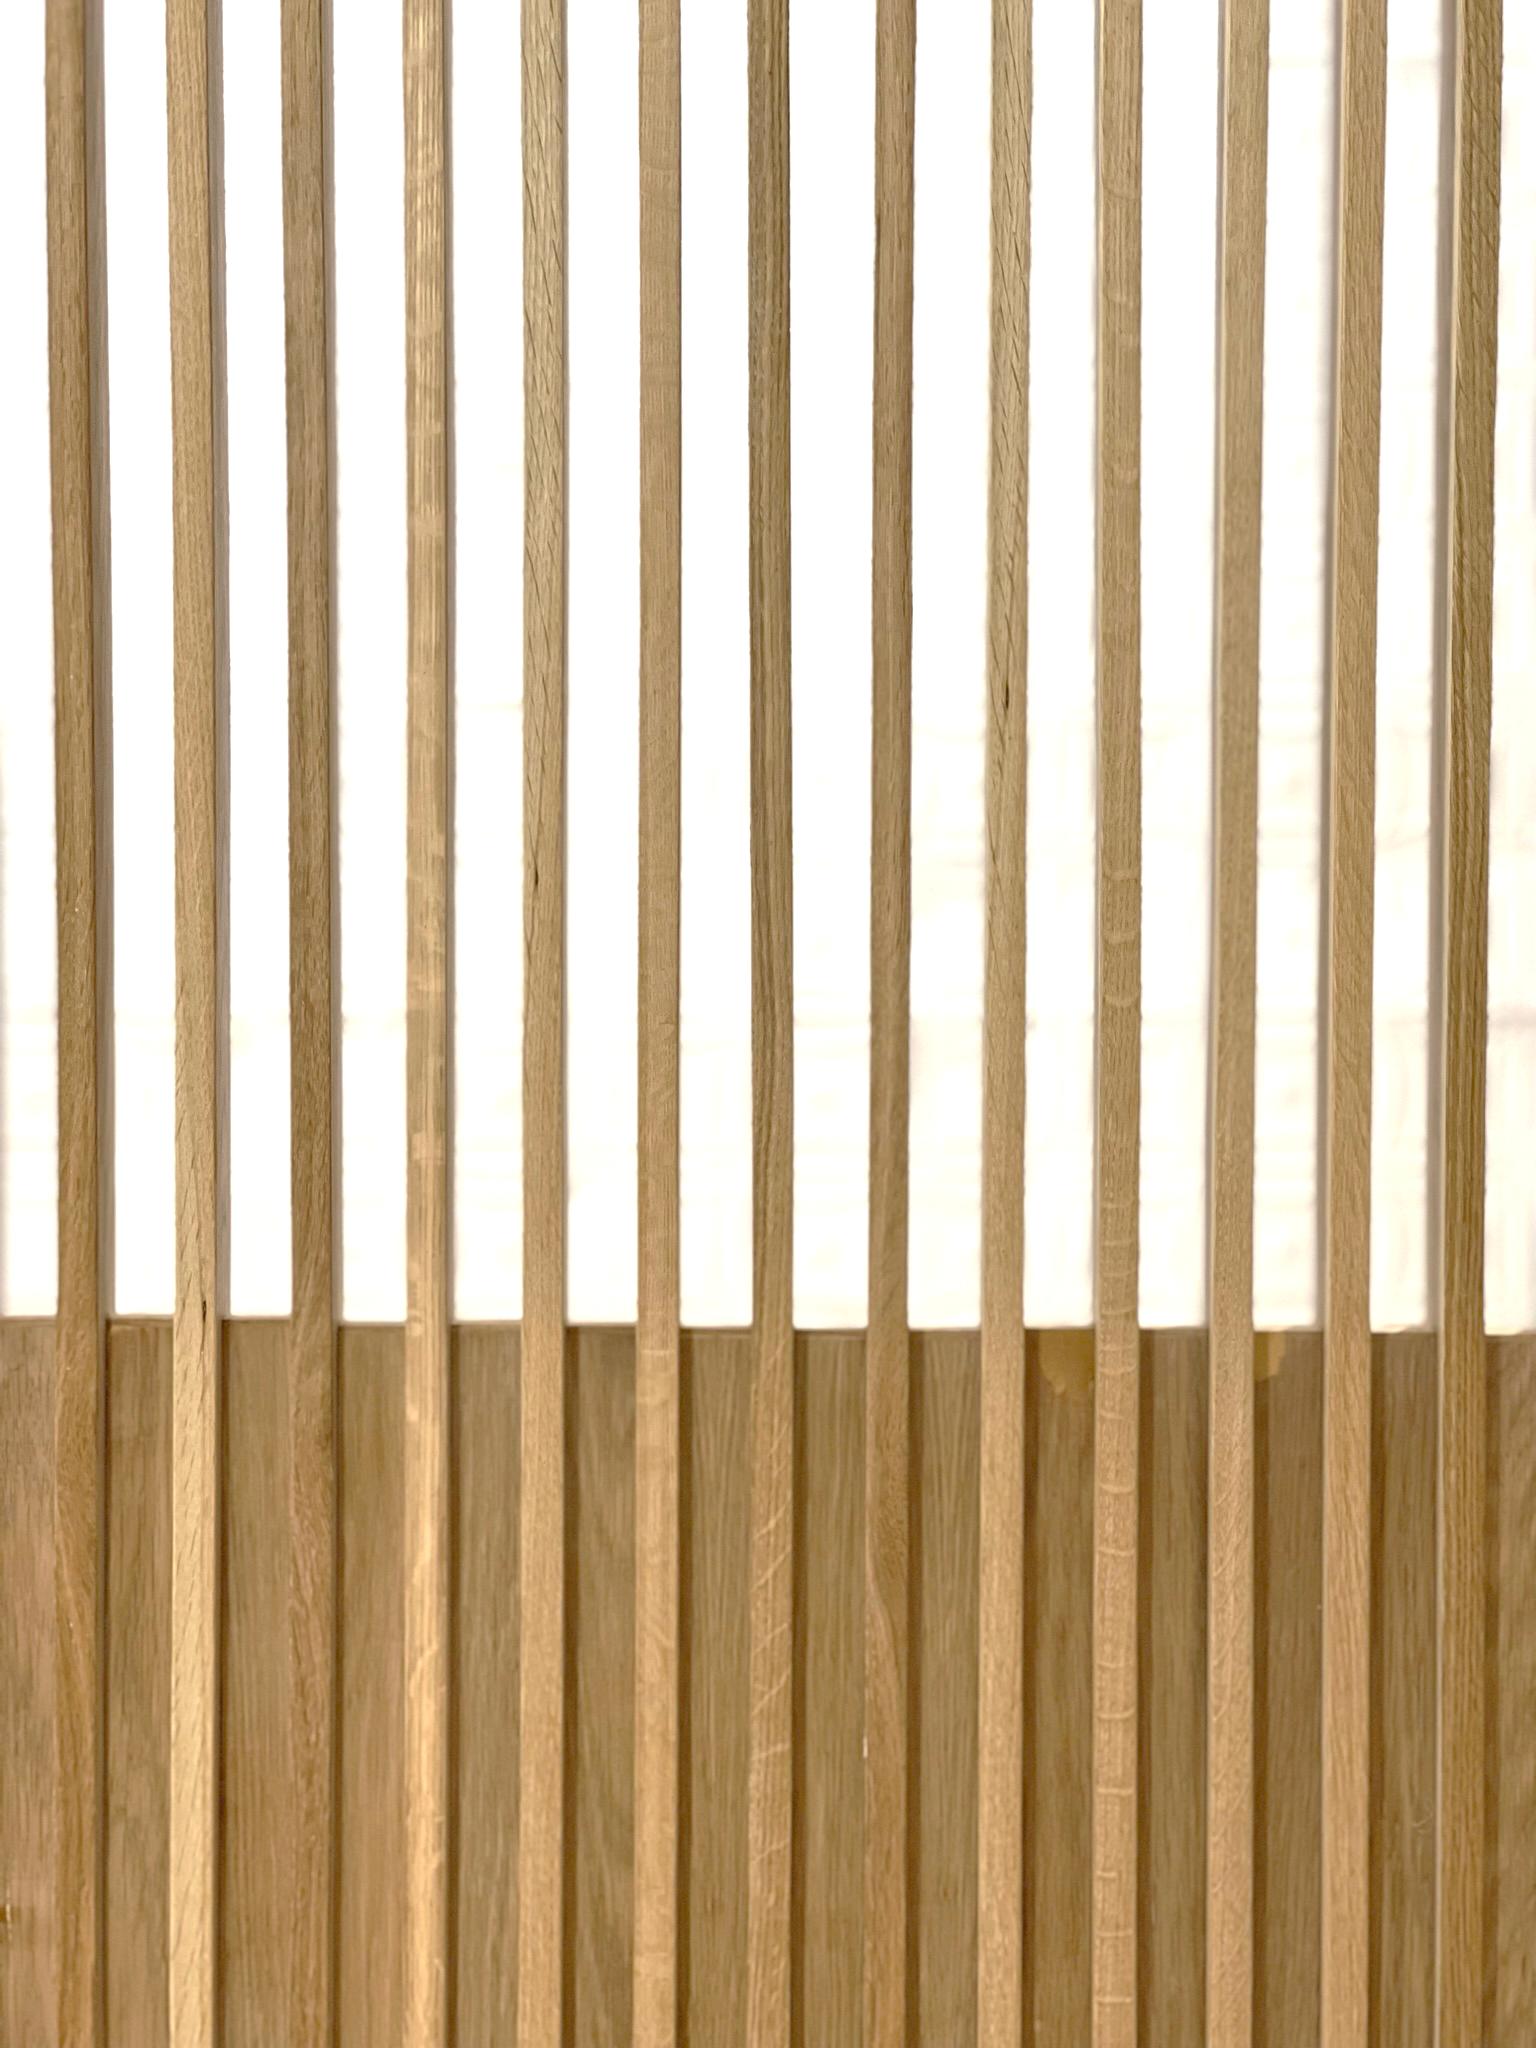 wooden pivot screens